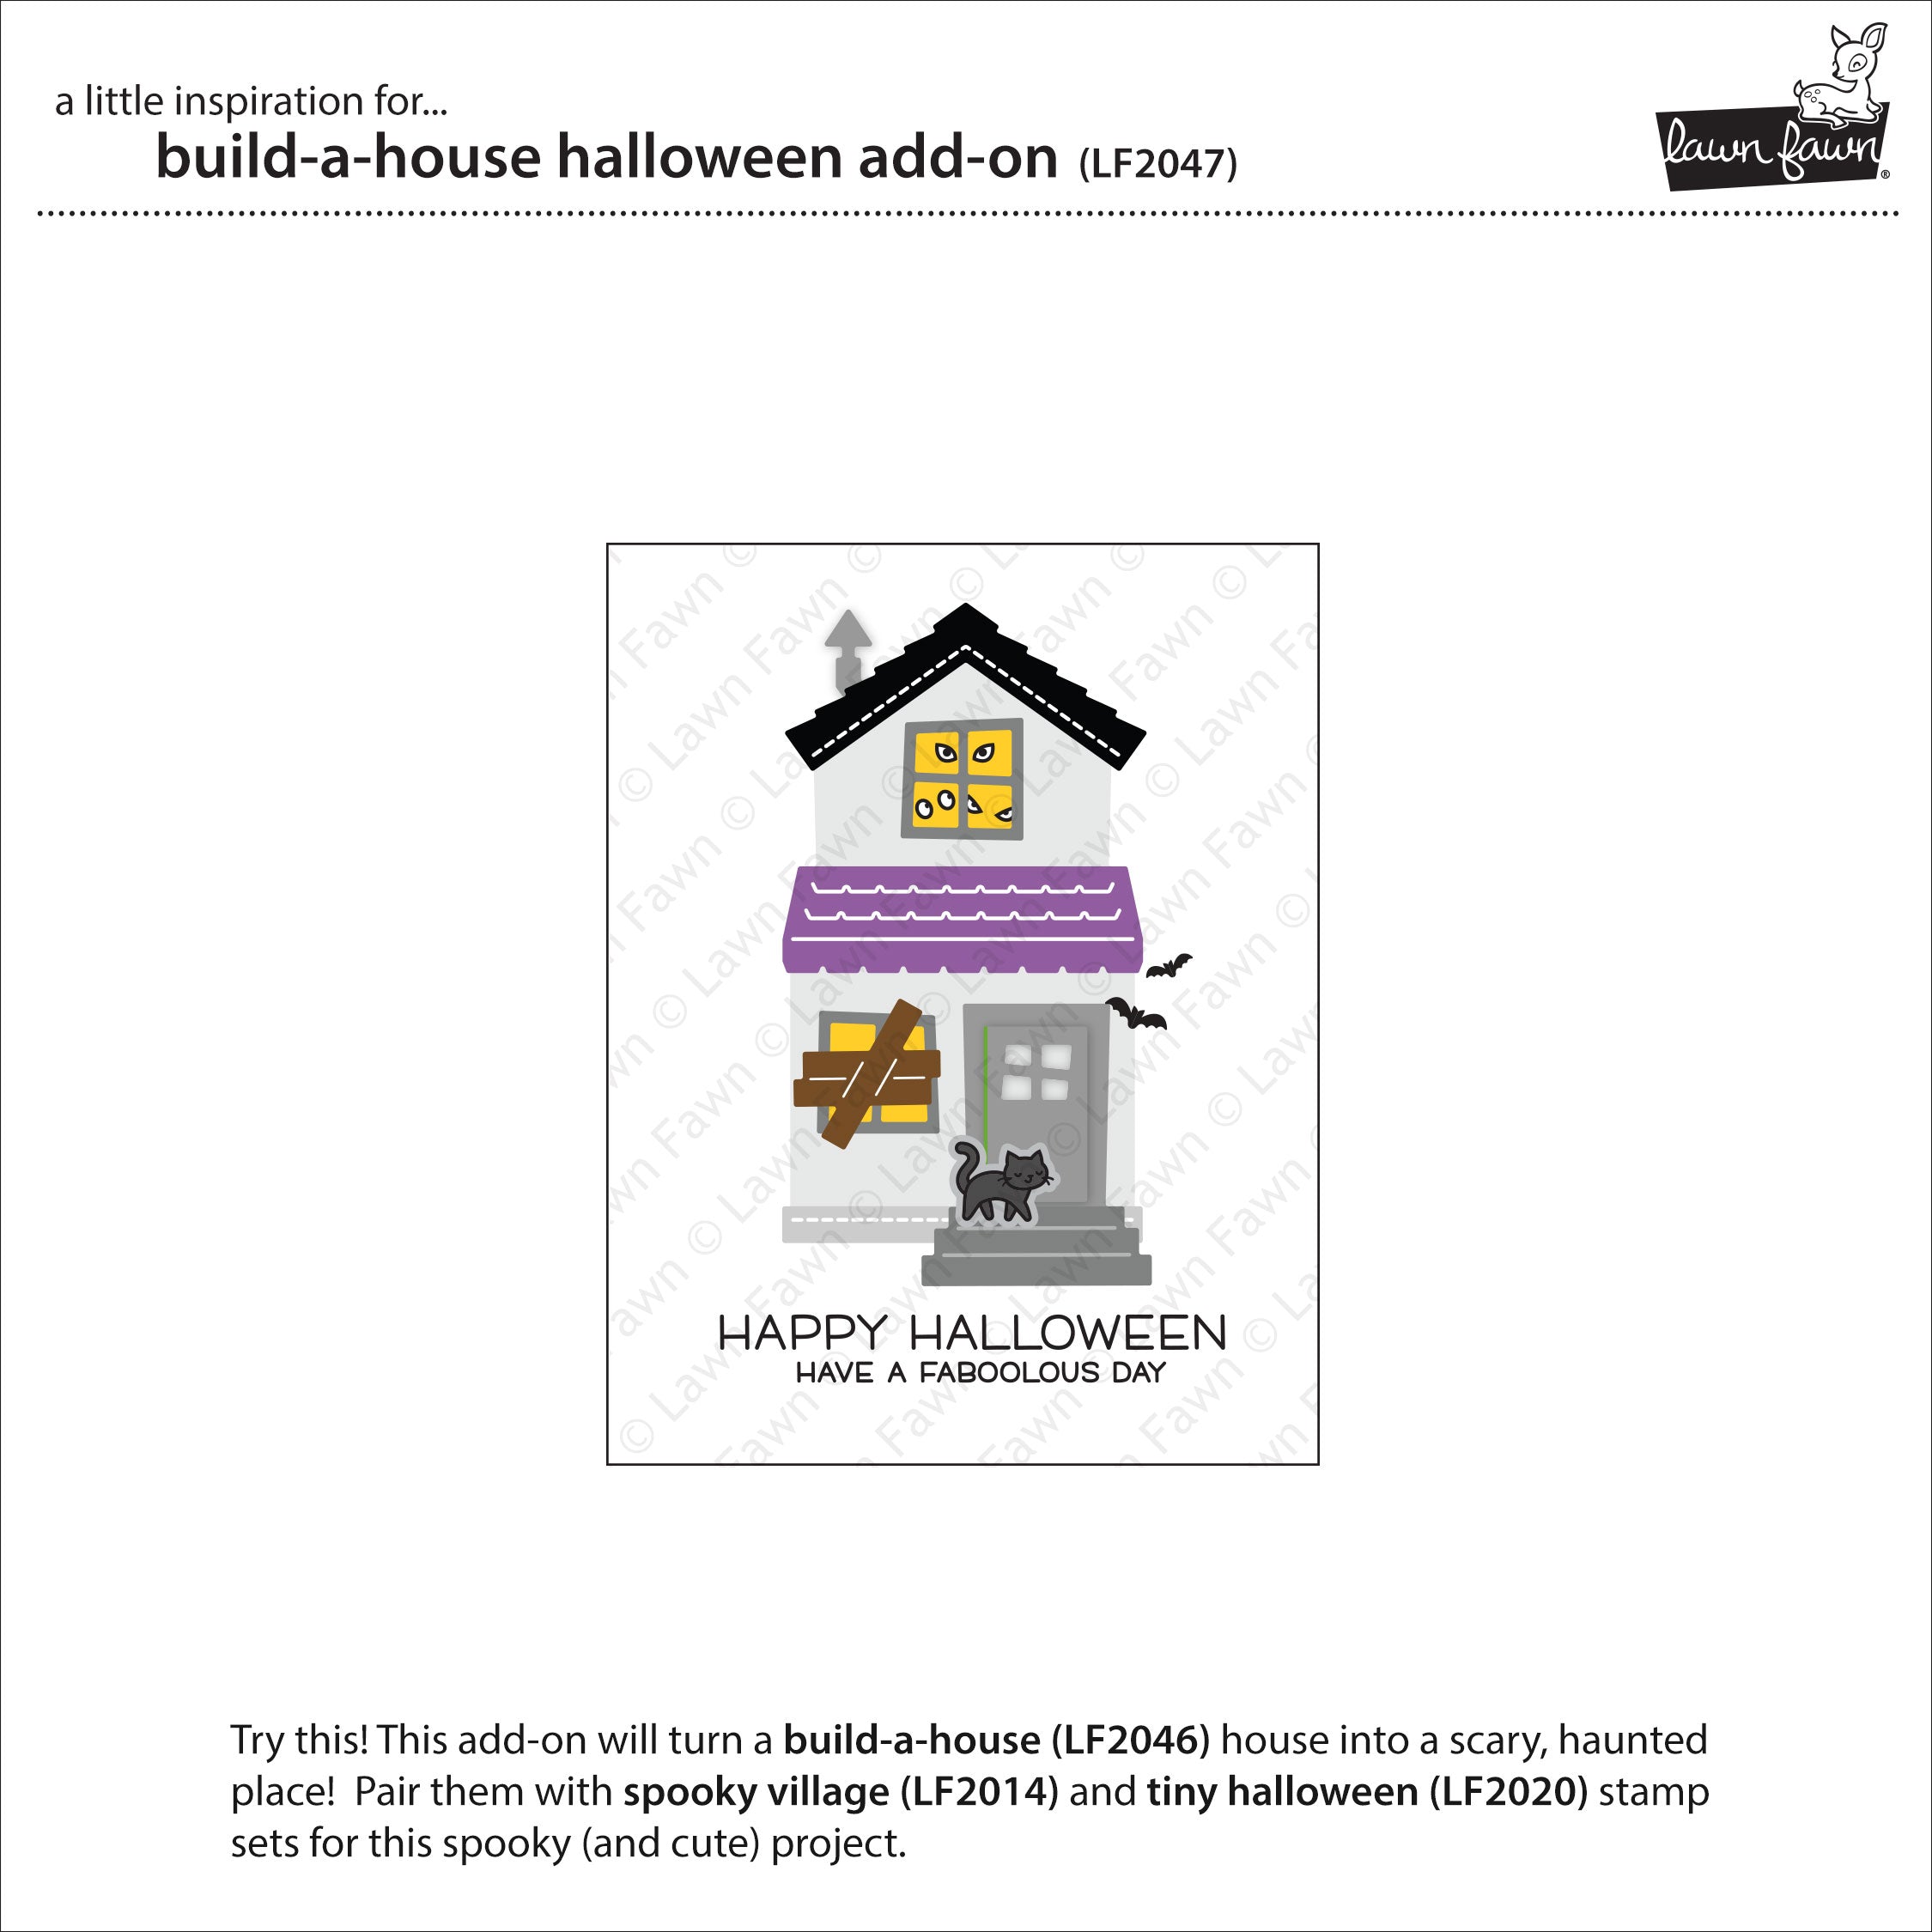 build-a-house halloween add-on